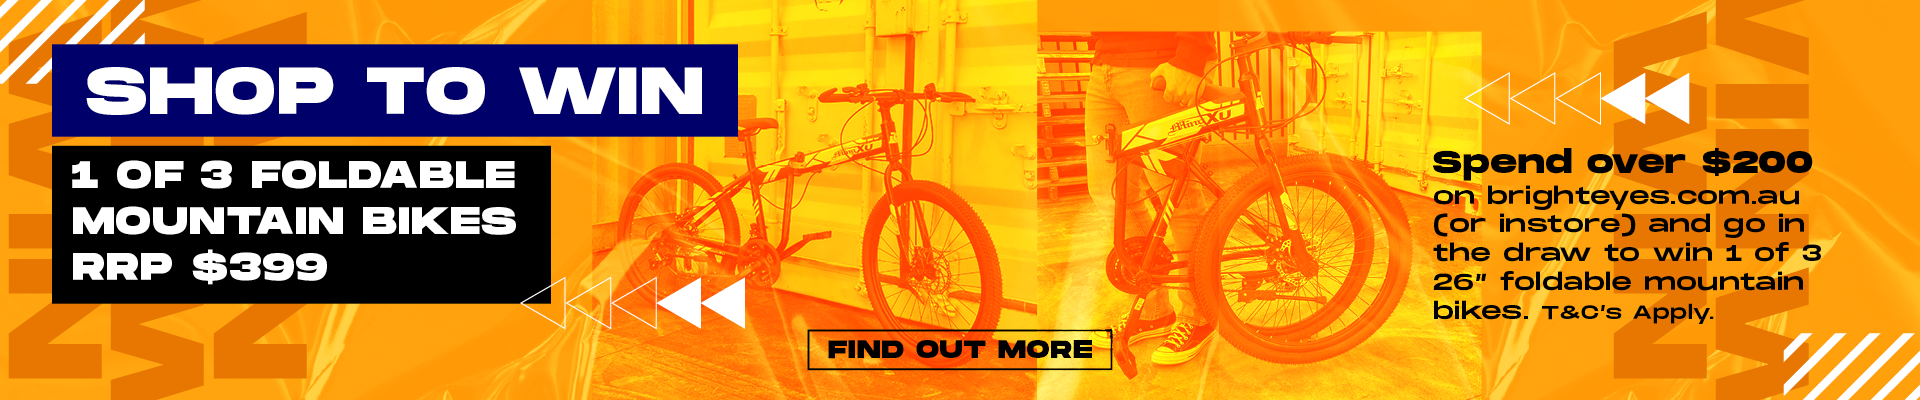 Shop to Win 1 of 3 Foldable Mountain Bikes (Desk)